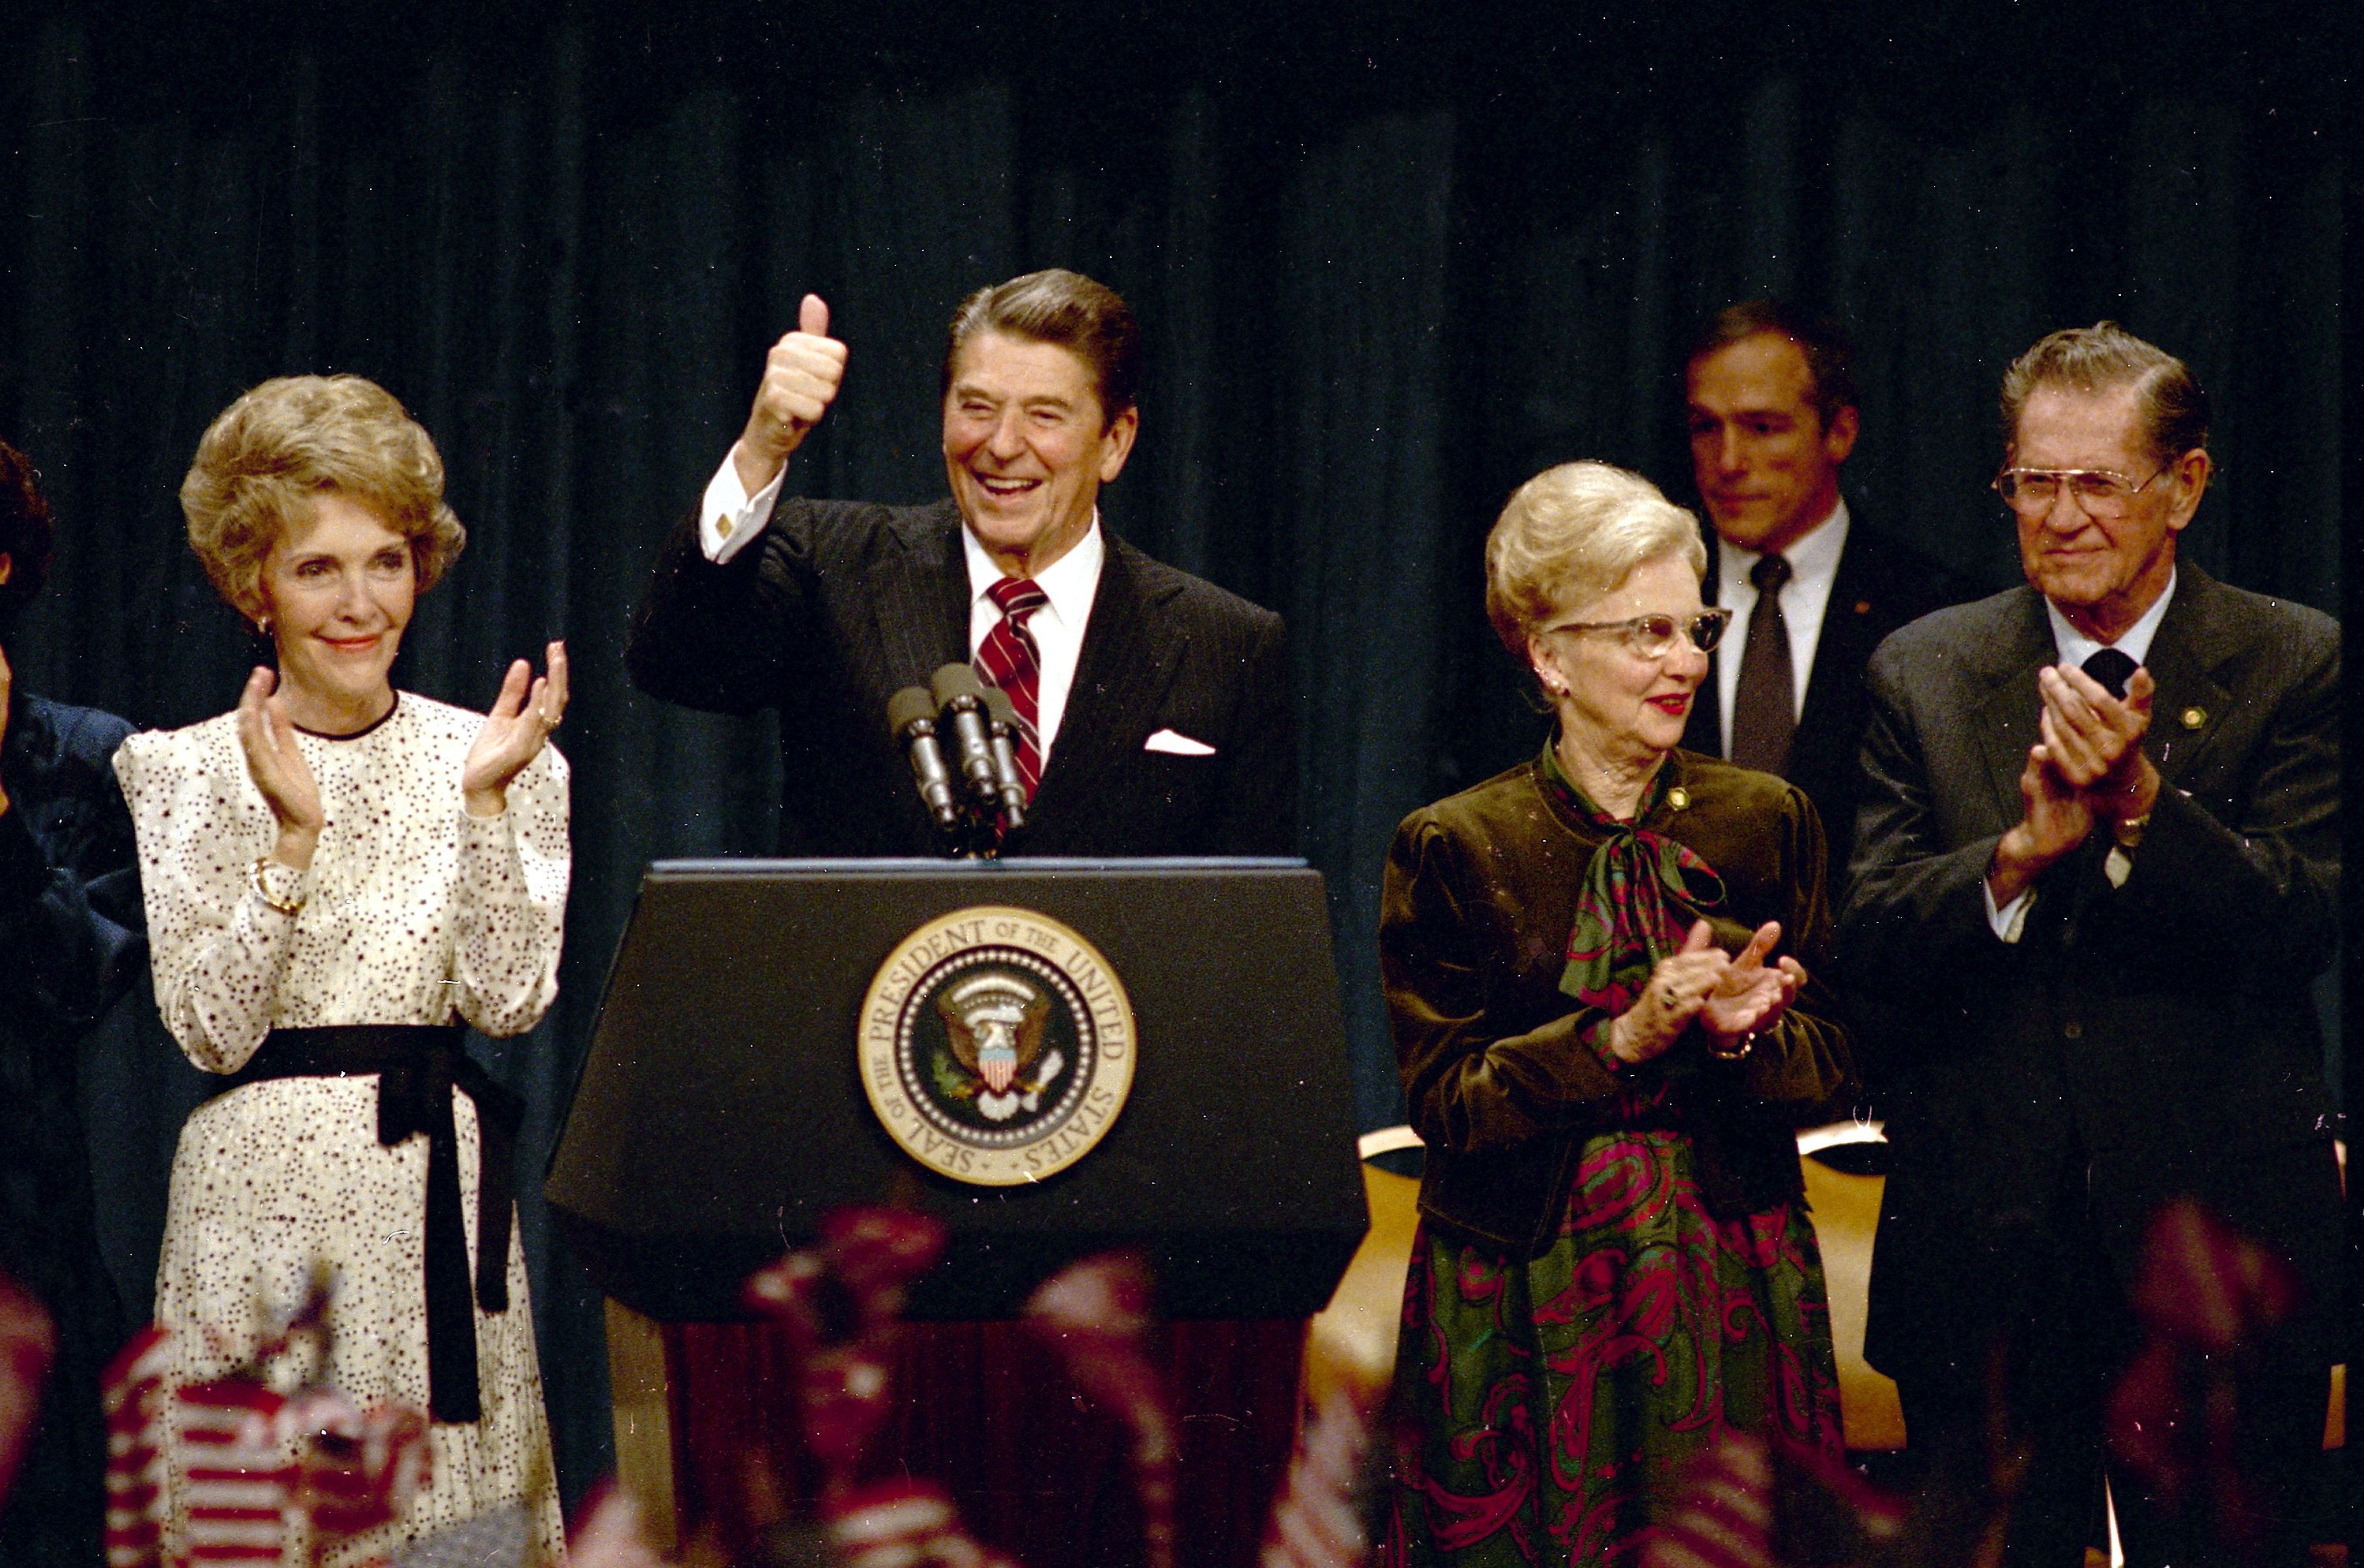 Ronald Reagan wins reelection